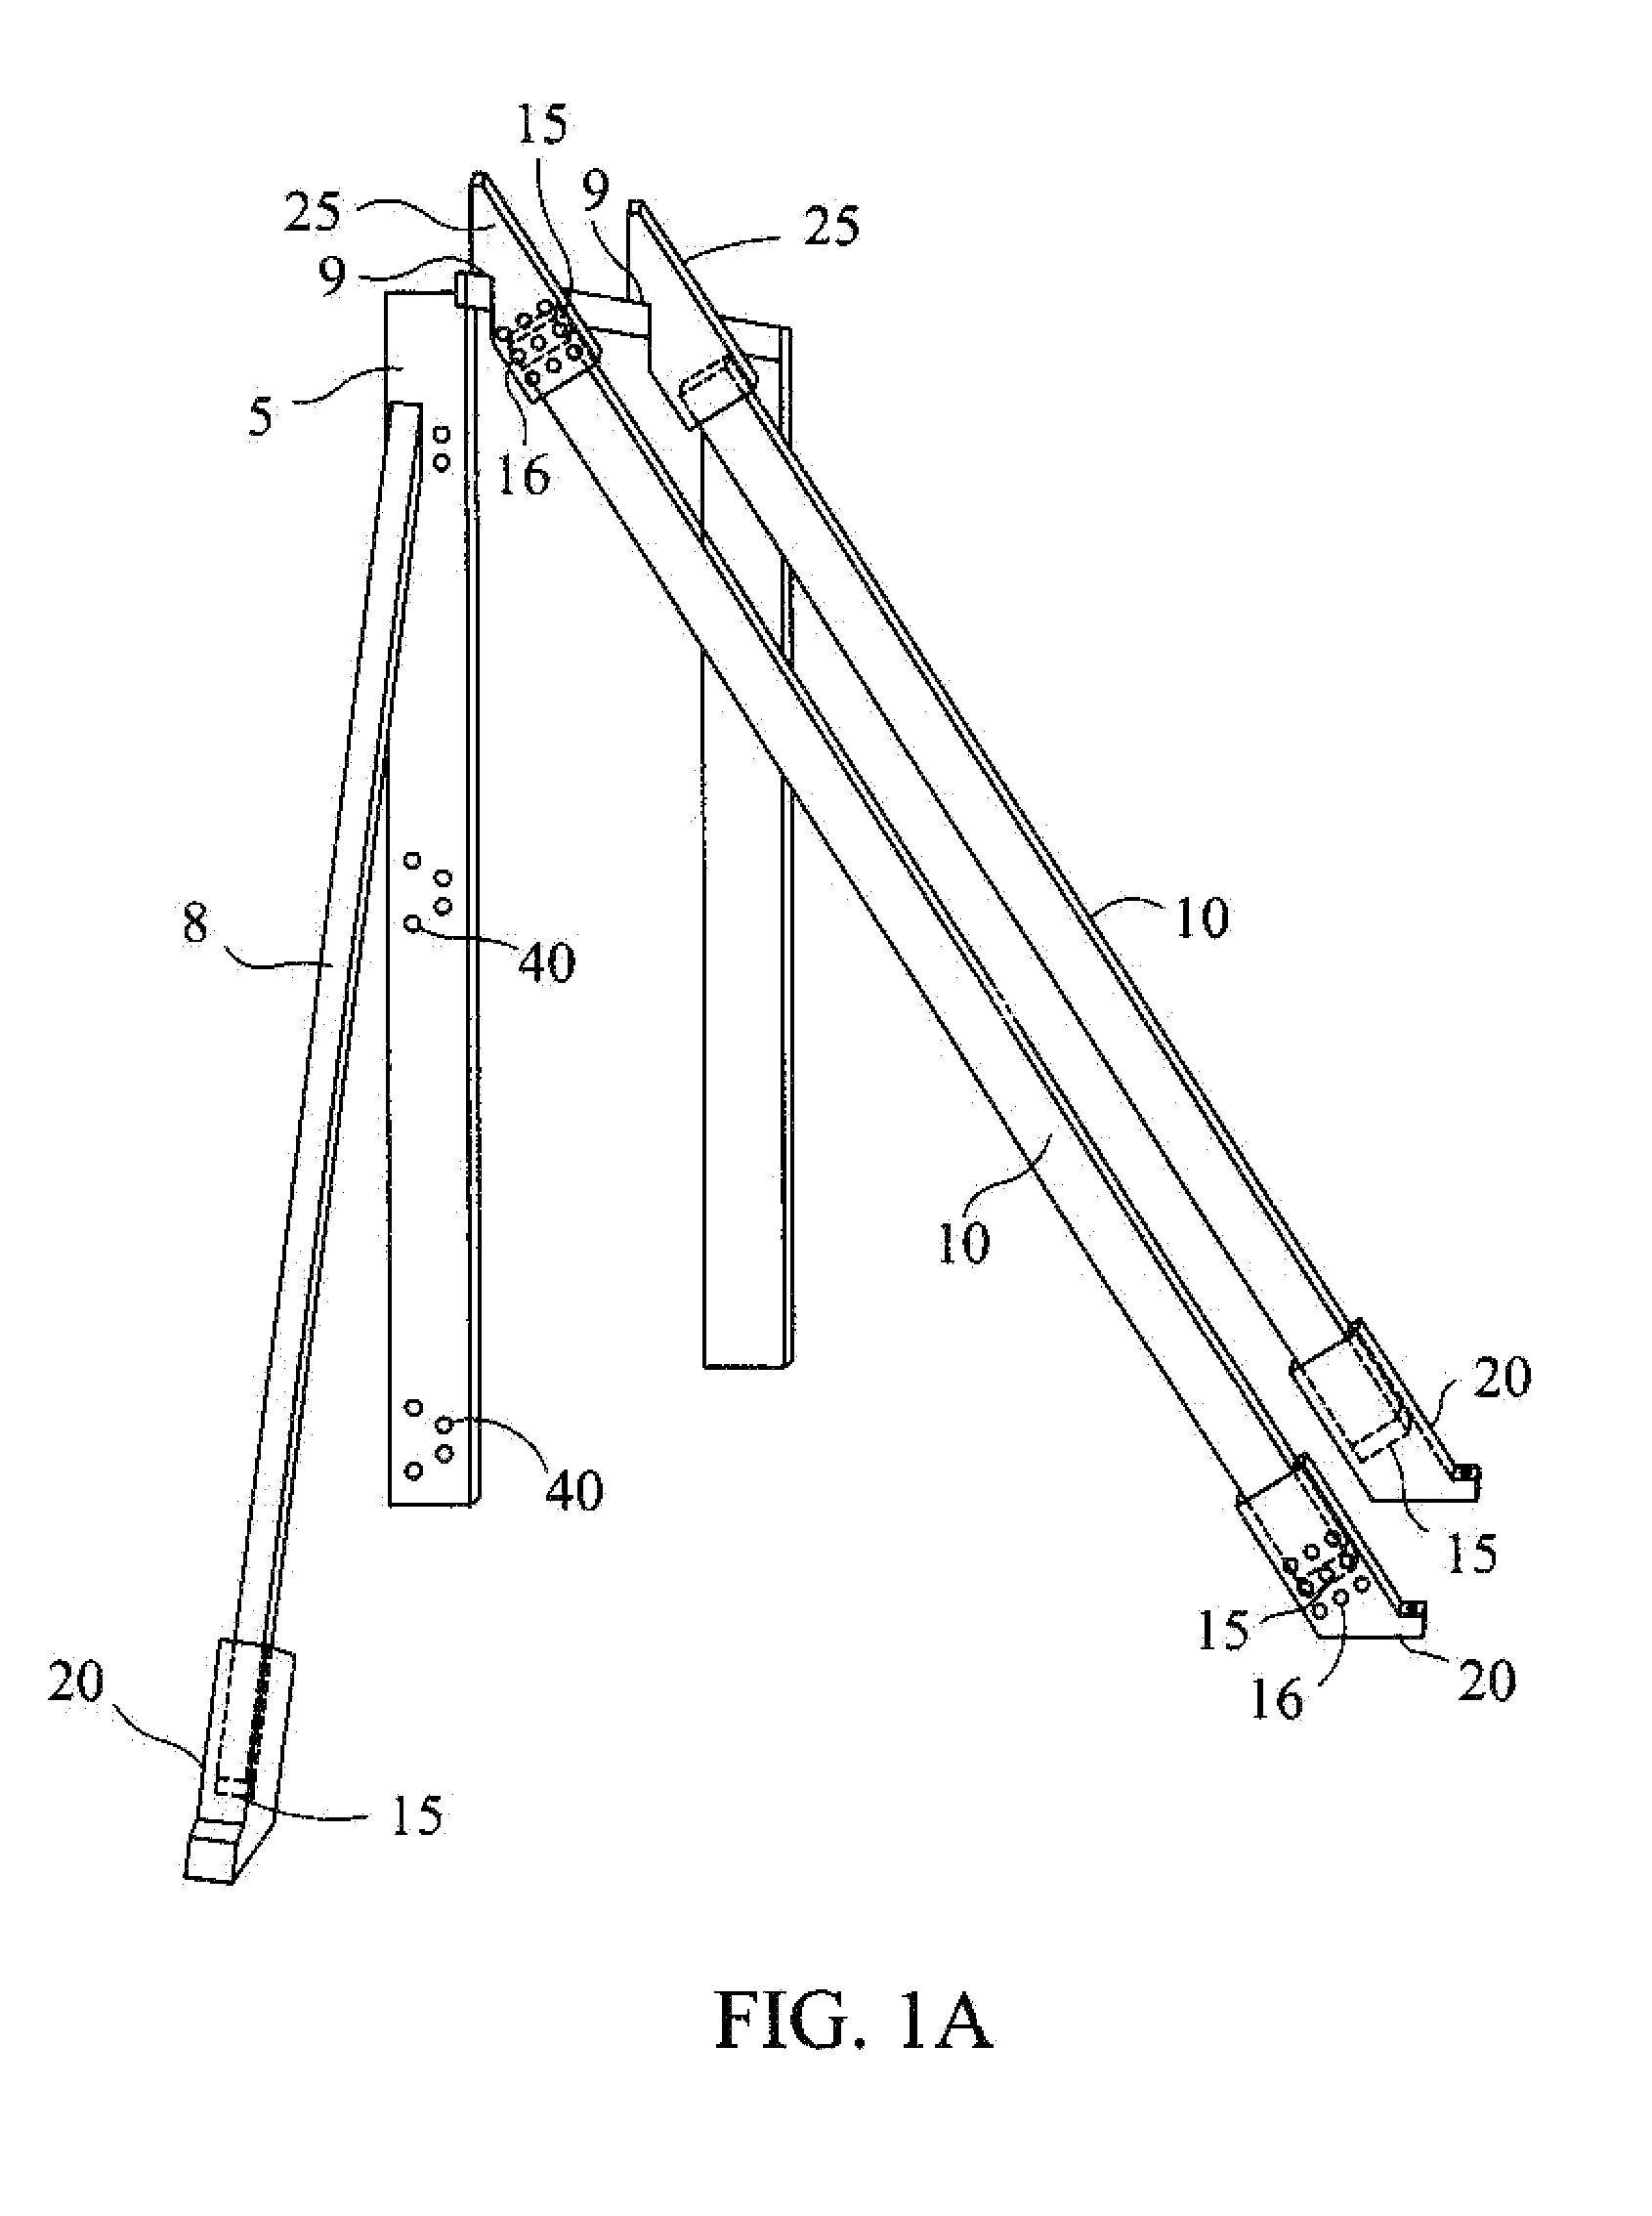 Door frame apparatus and method for installing a door frame